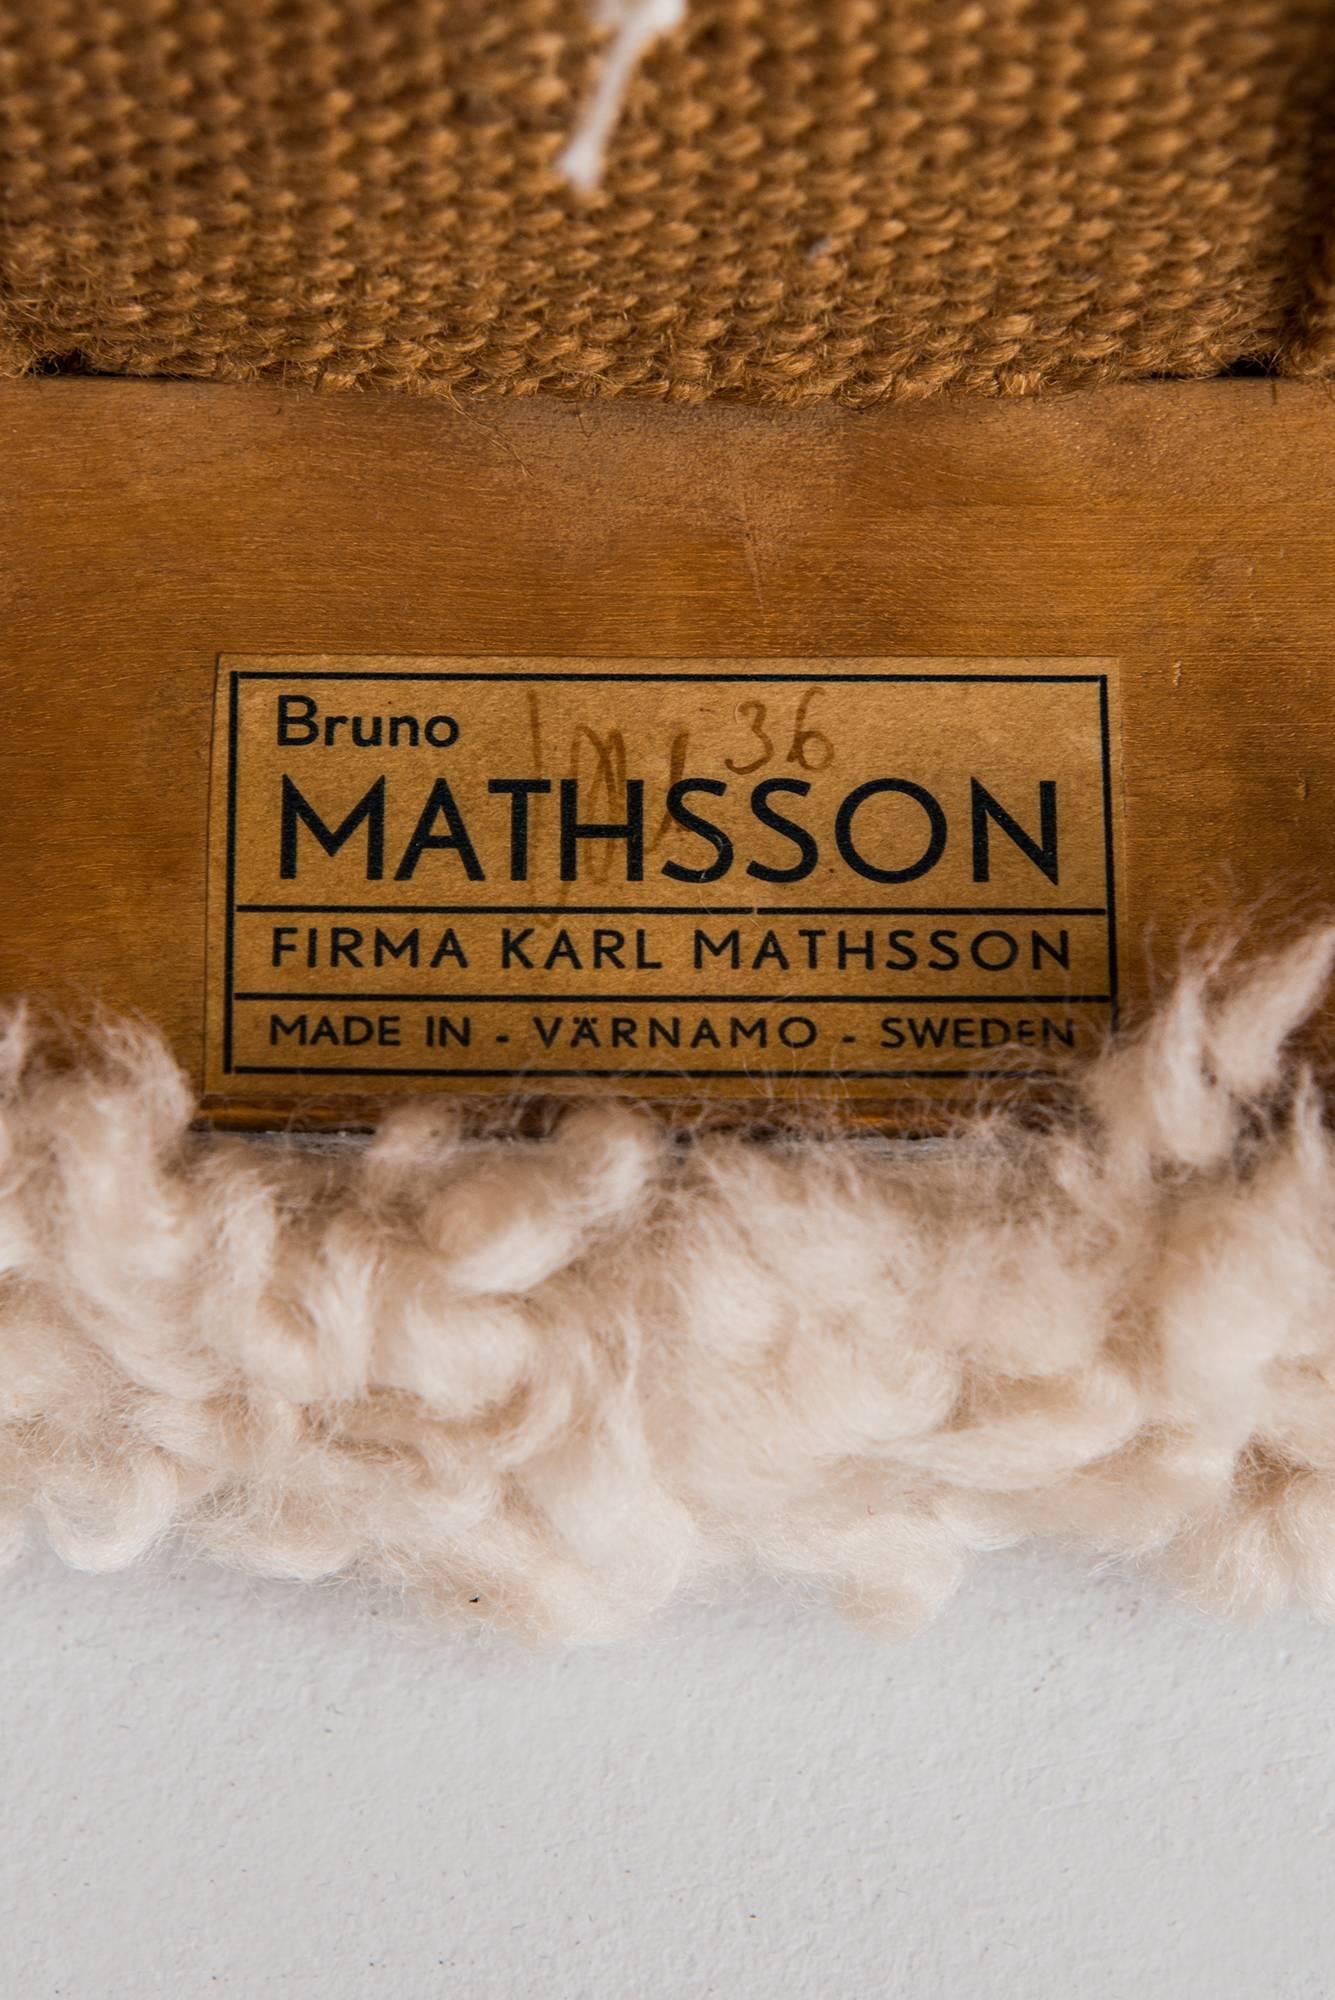 Leather Bruno Mathsson Stool by Karl Mathsson in Värnamo, Sweden